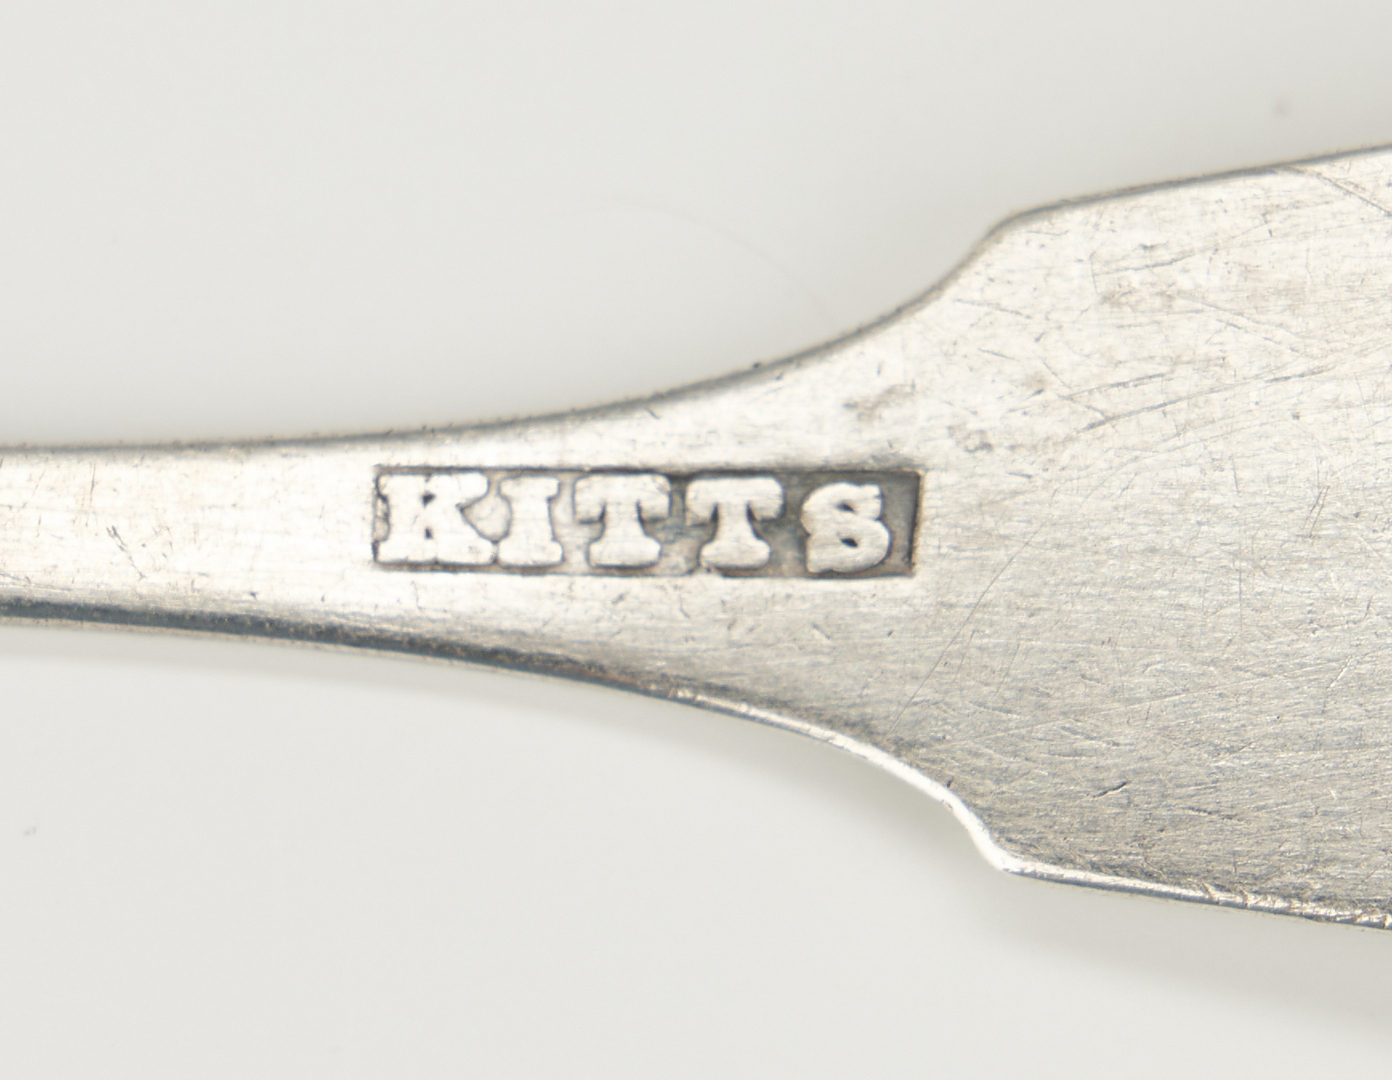 Lot 74: 3 Kitts Kentucky Coin Silver Items inc. Mug